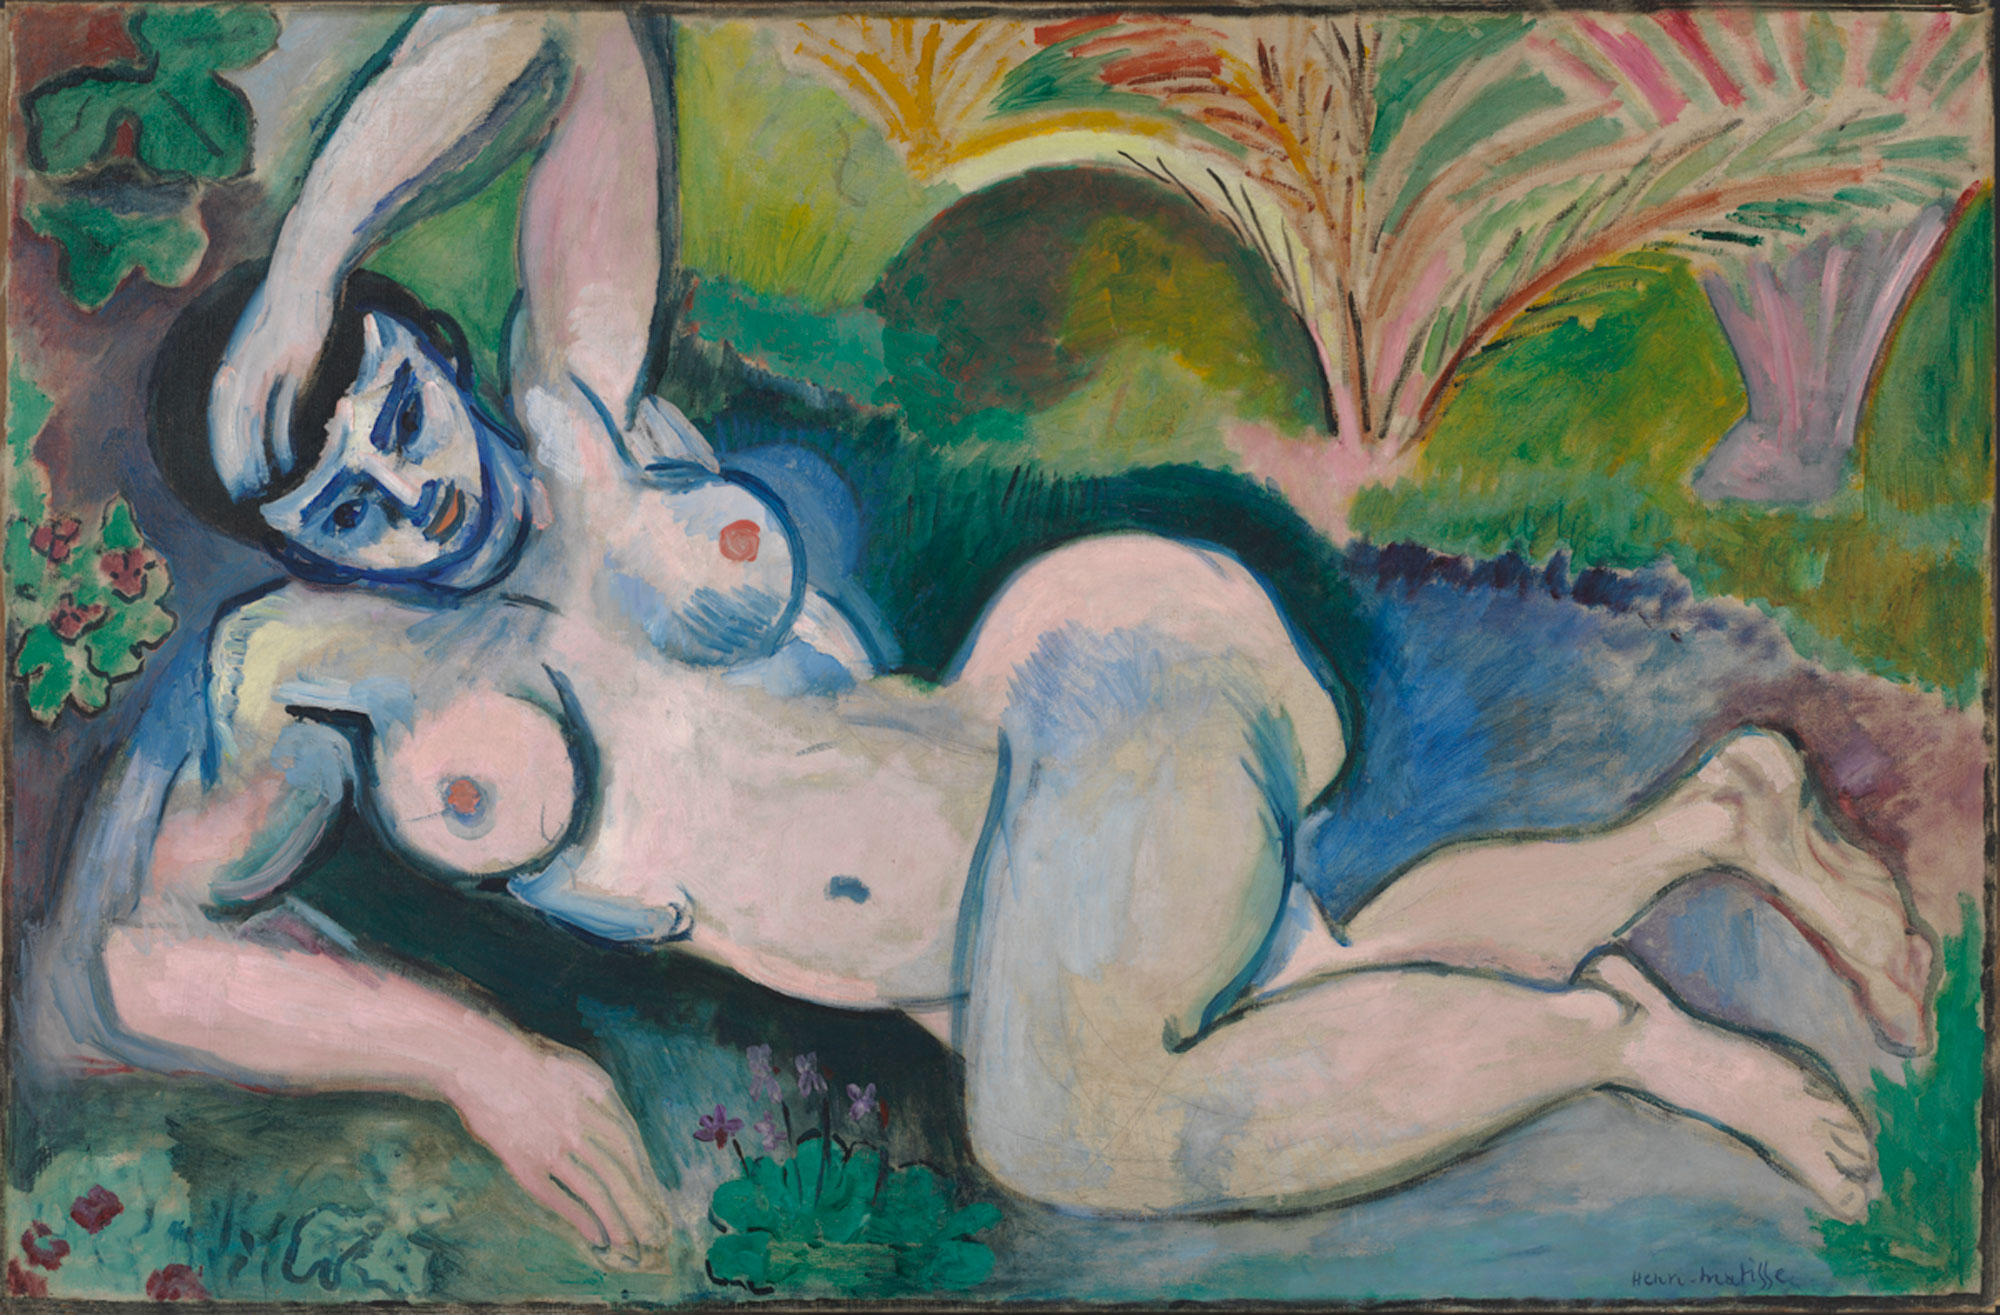 Henri Matisse, The Blue Nude (Souvenir de Biskra), 1907, oil on canvas, 92.1 x 140.3 cm (Baltimore Museum of Art)